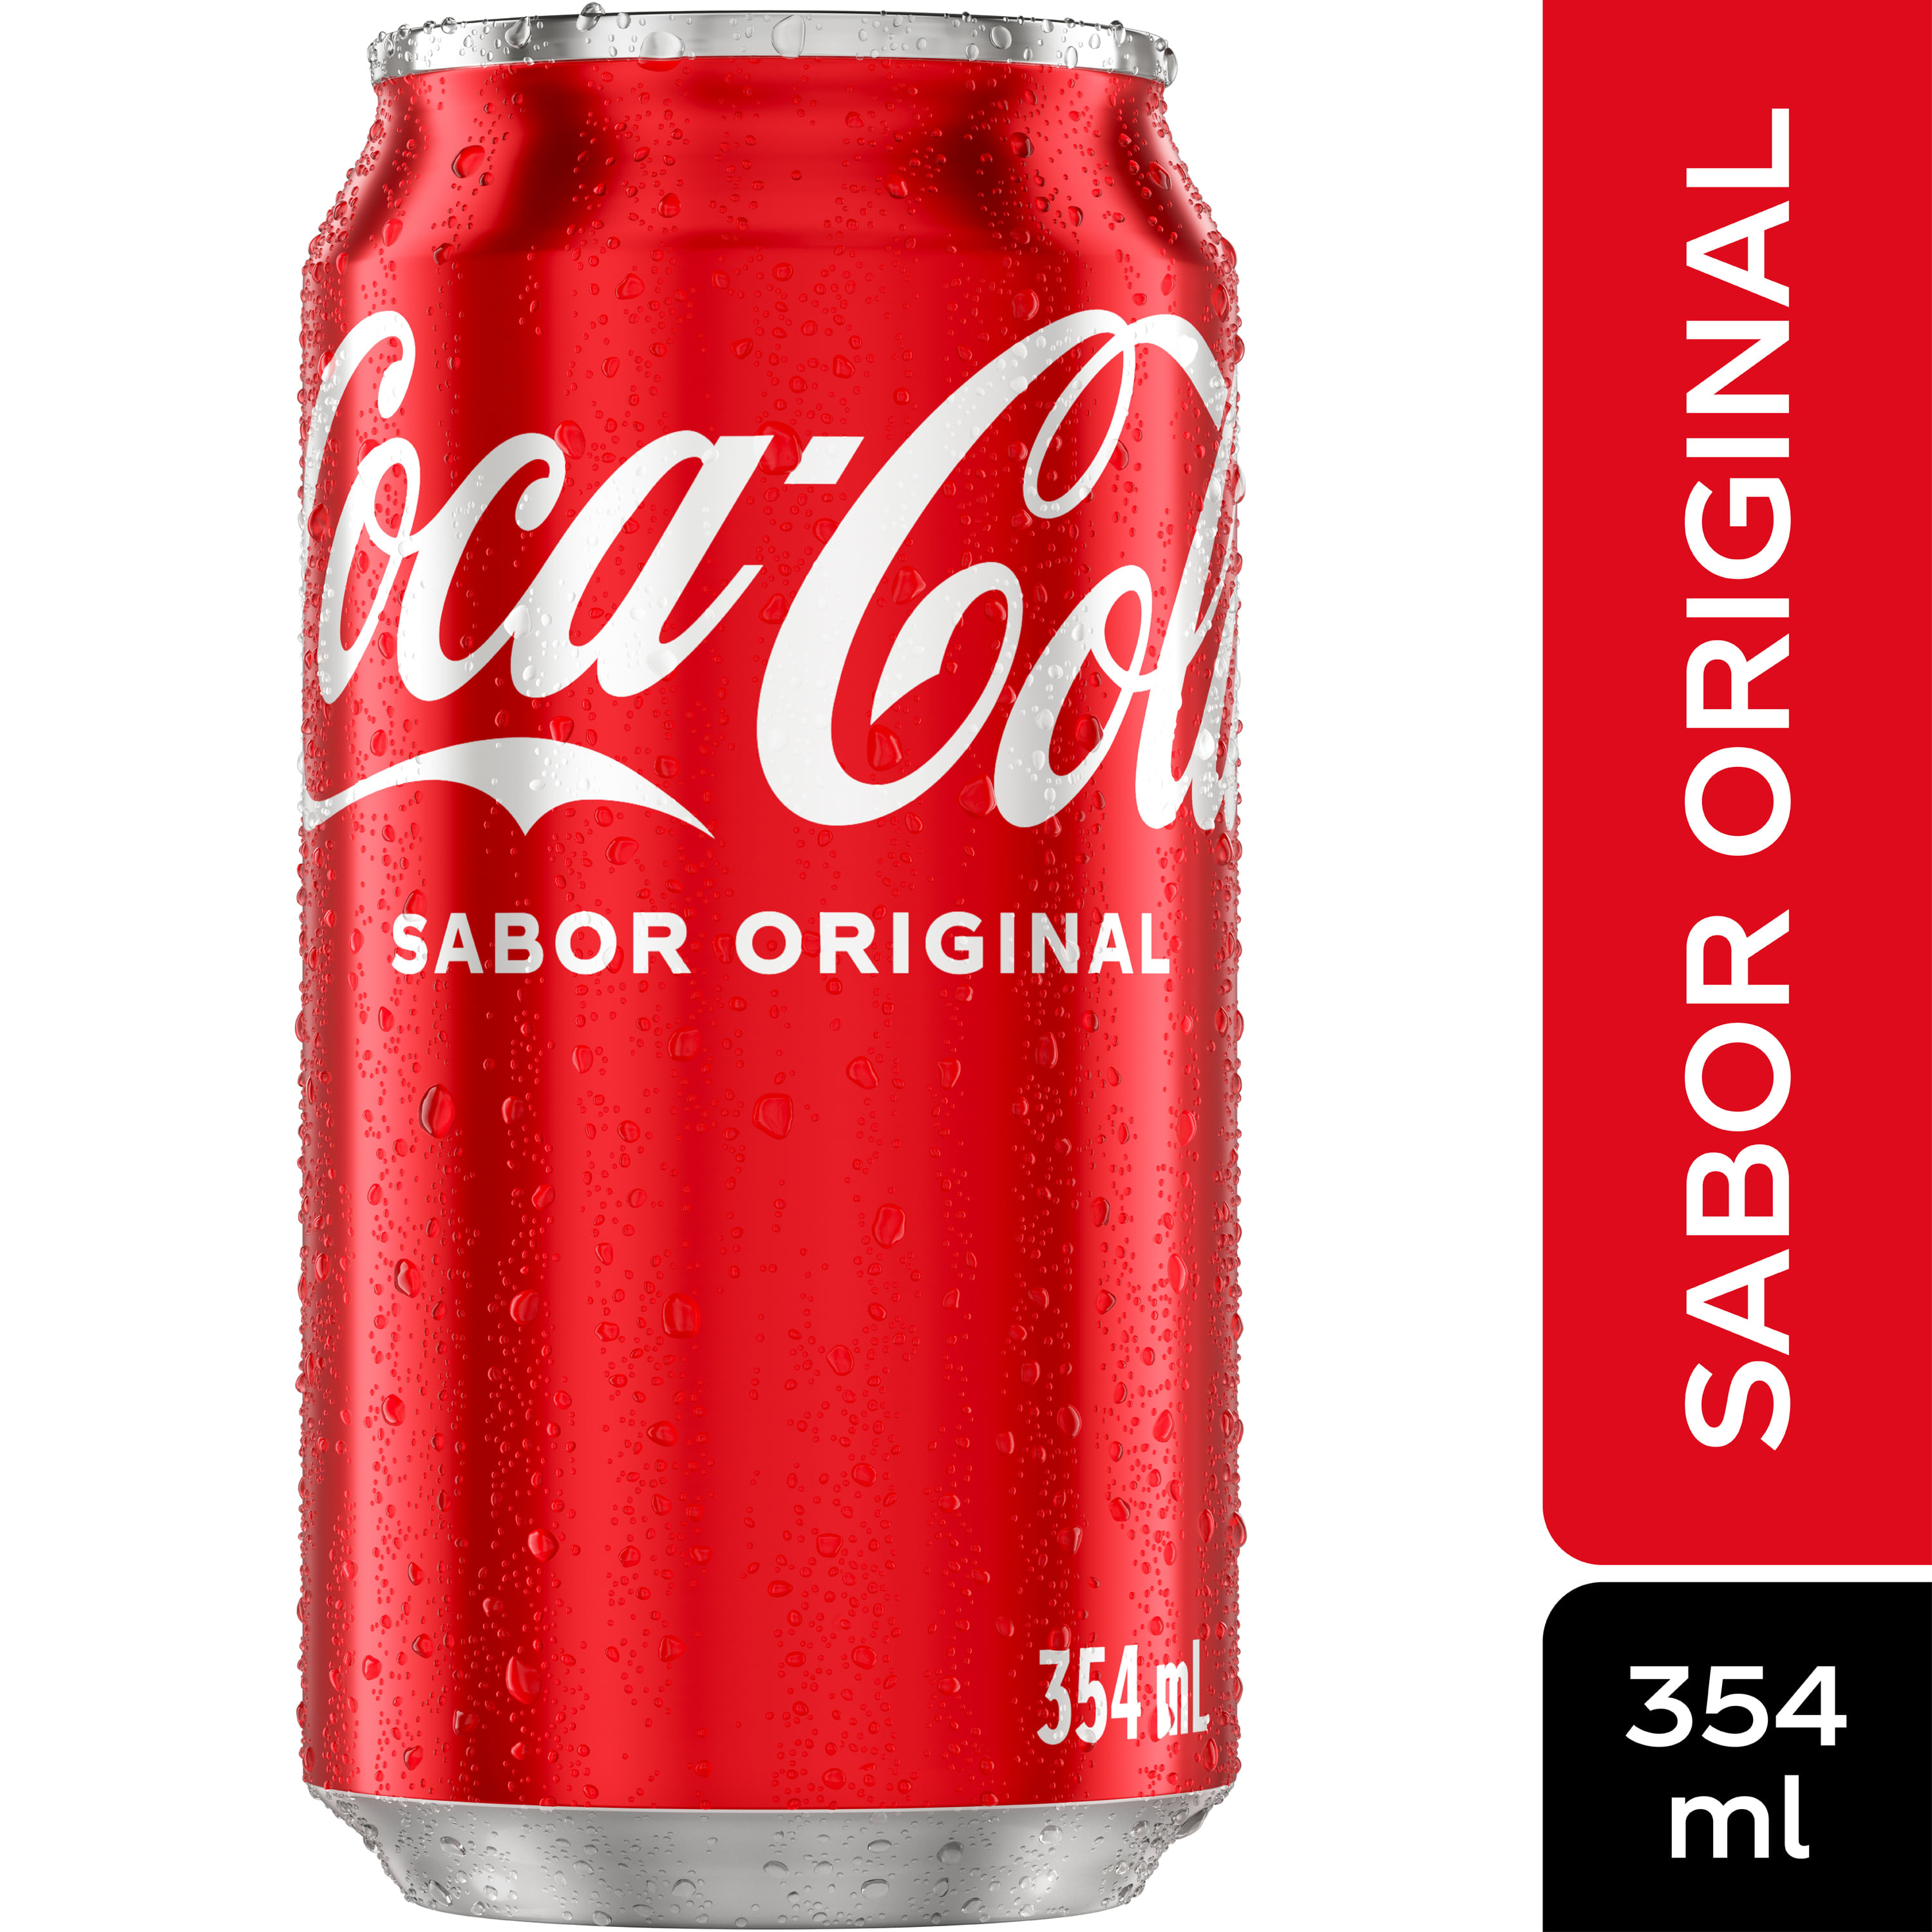 Coca Cola Original 12pk Lata 4248ml - Maxi Despensa